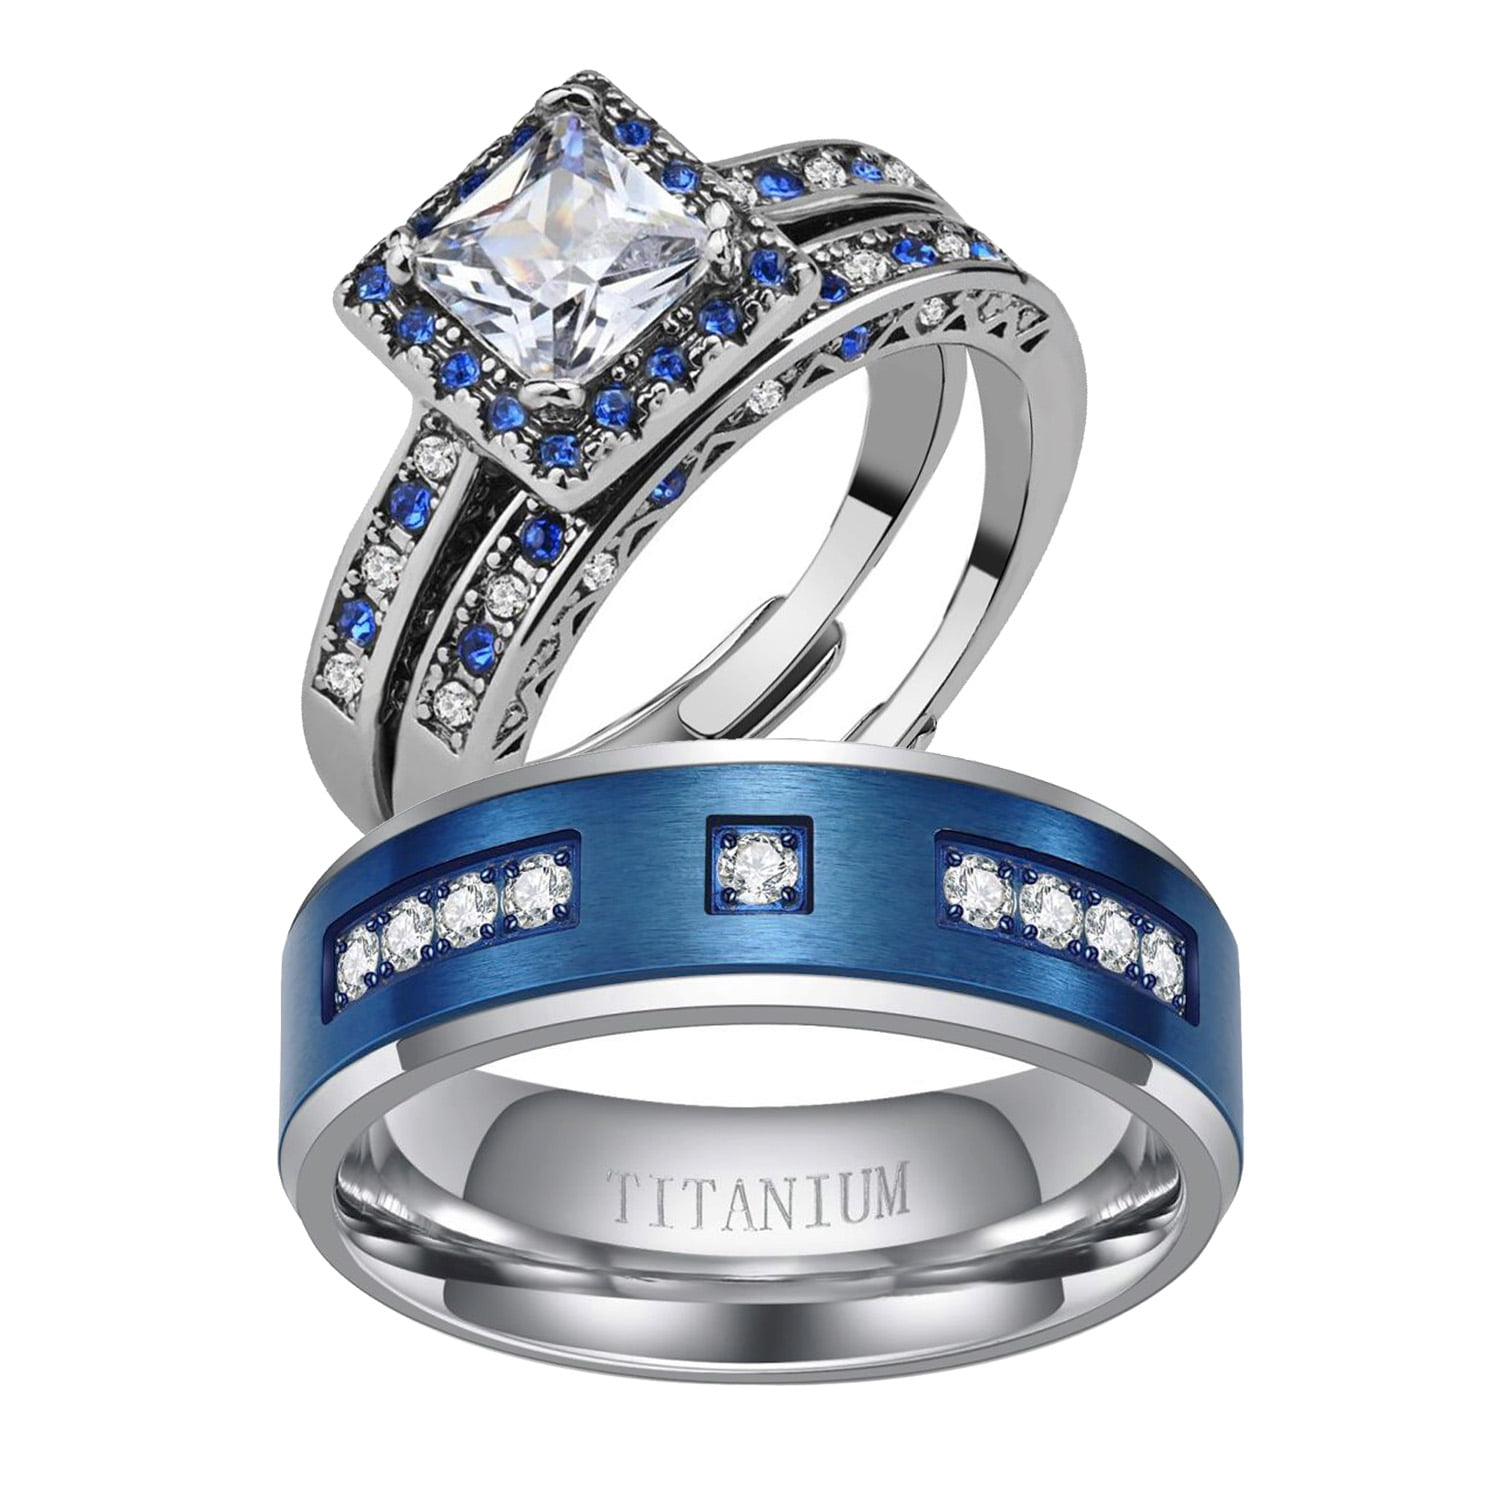 Premium Couple Ring Set Titanium and 925 Sterling Silver Wedding Ring Set